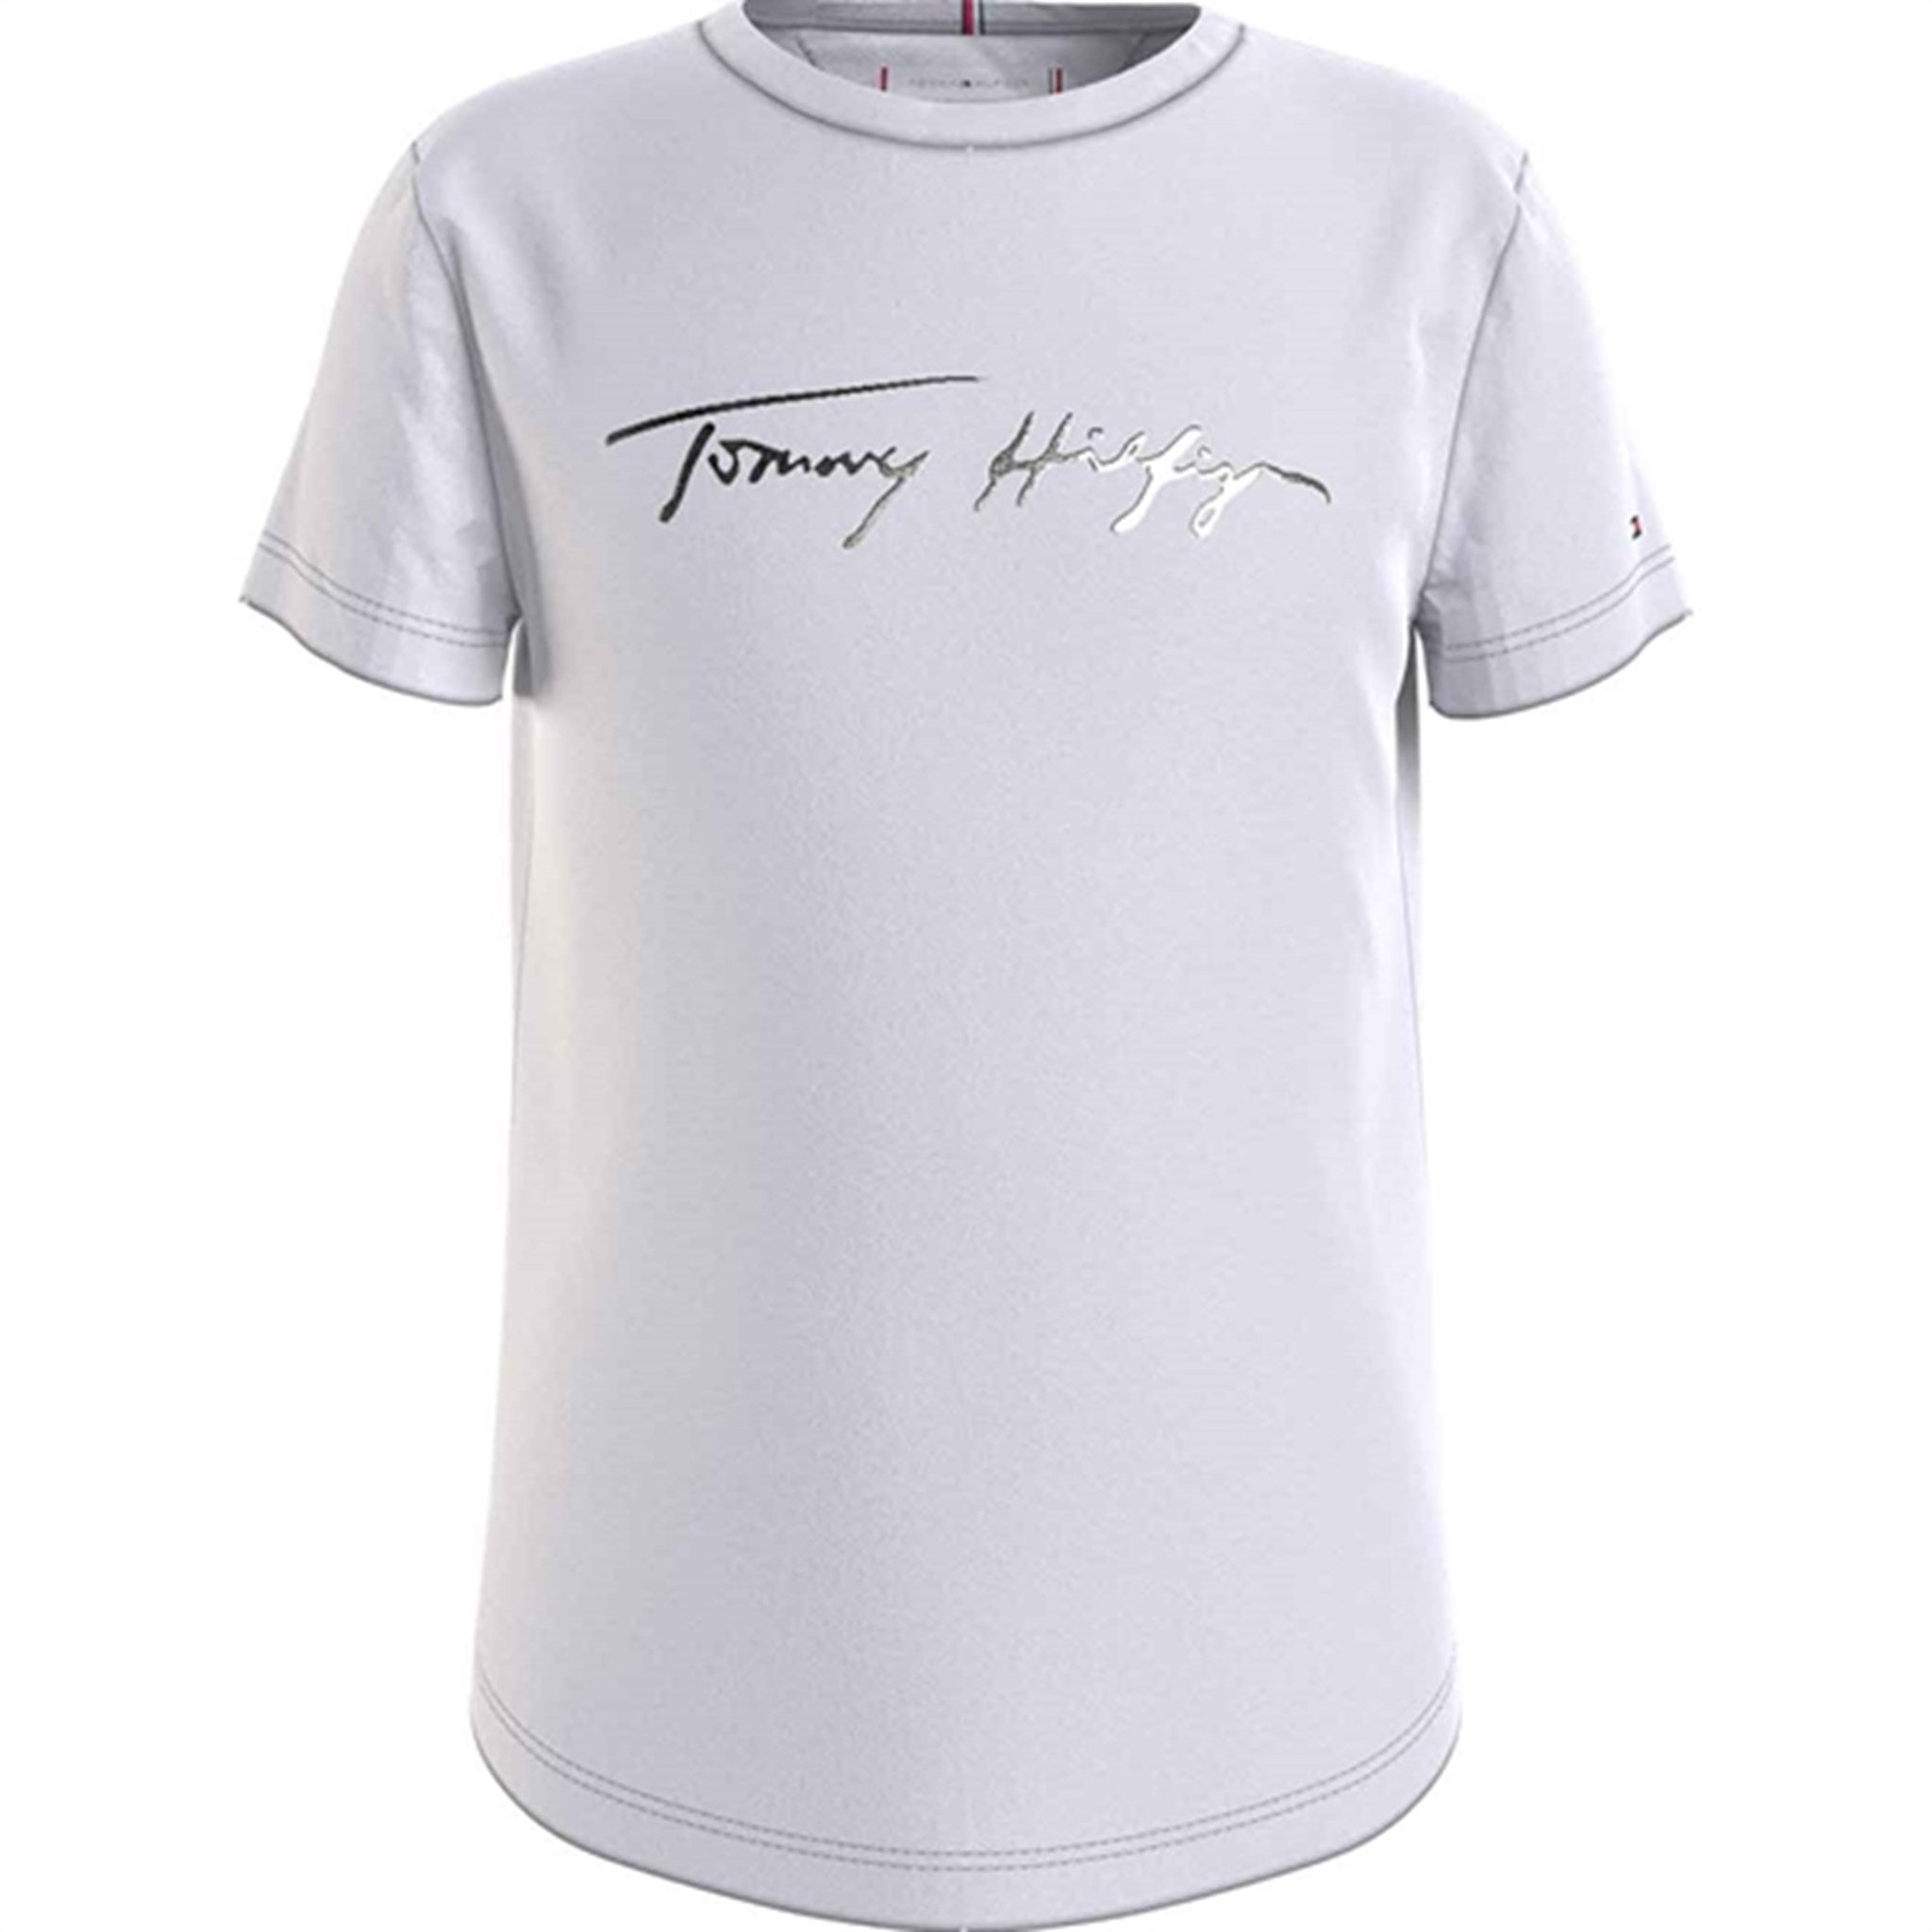 Tommy Hilfiger Script Print T-shirt White S/S